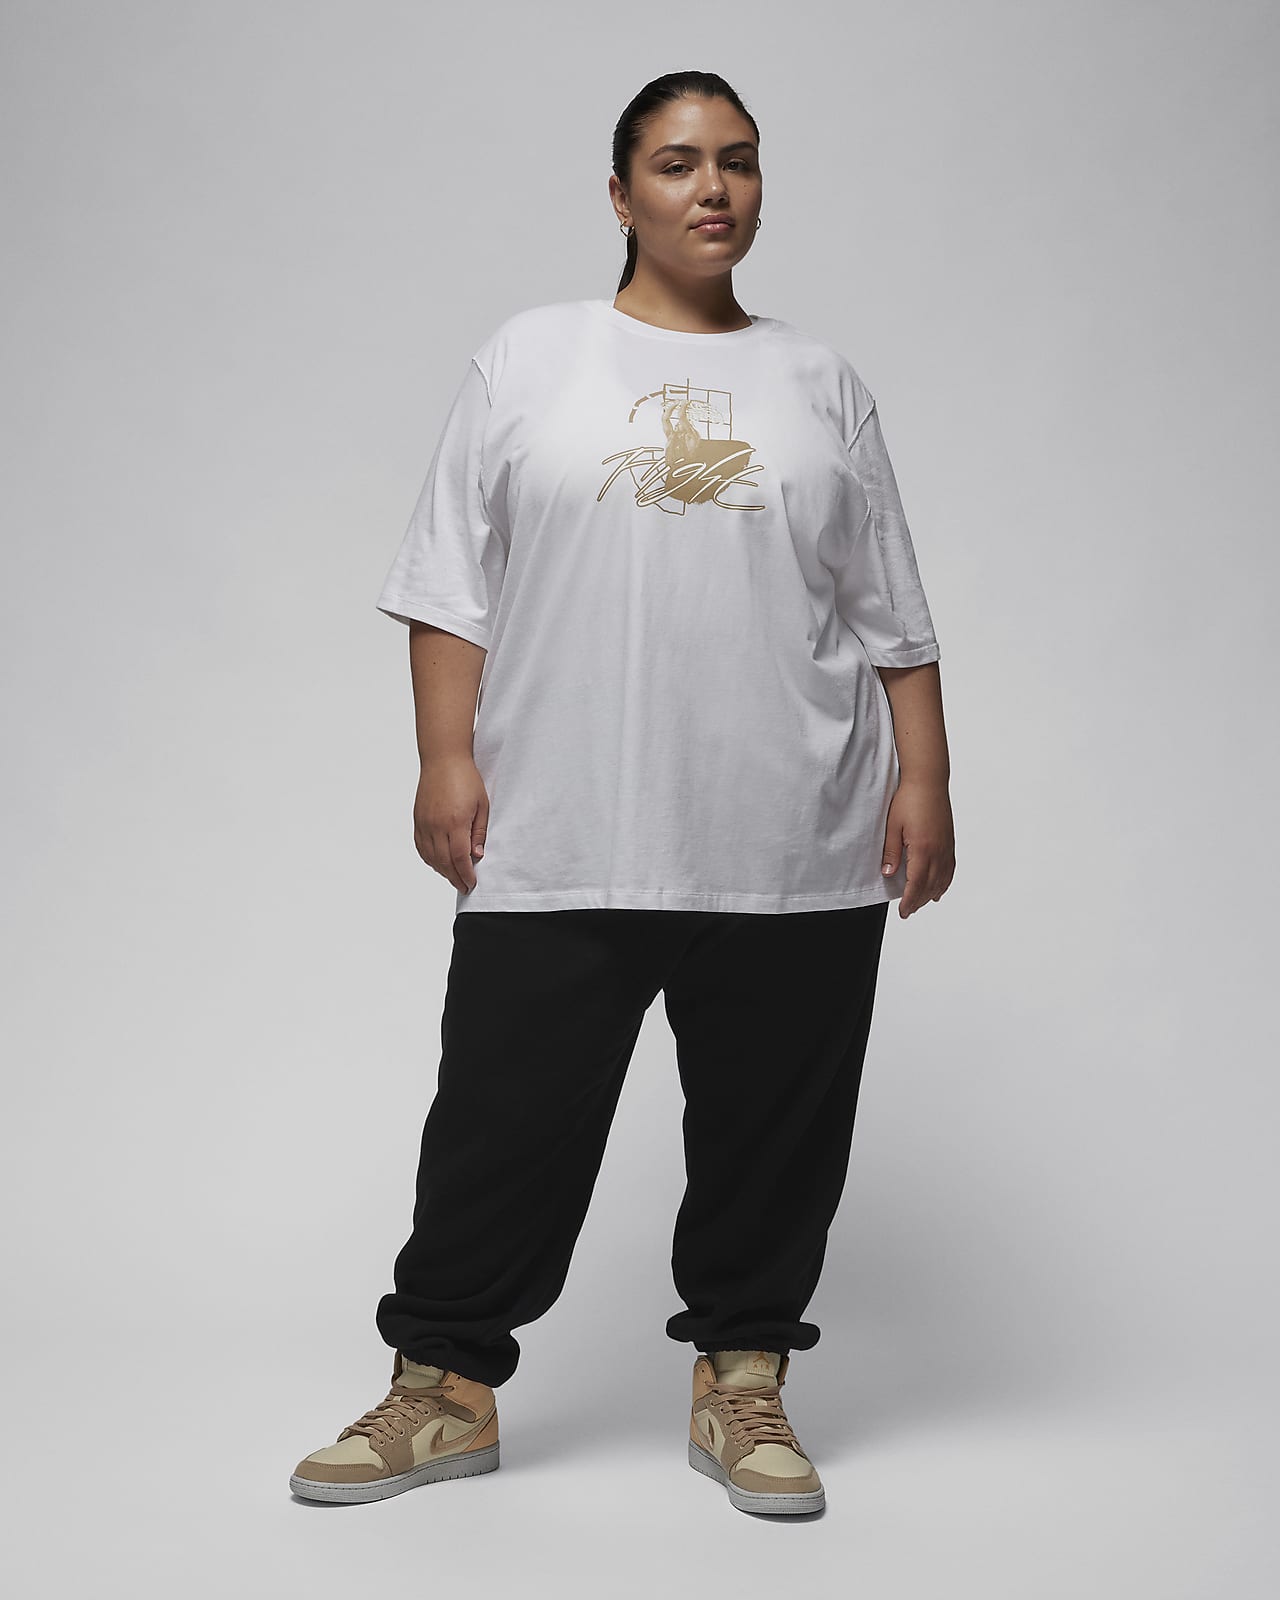 Jordan Women's Graphic T-Shirt (Plus Size)